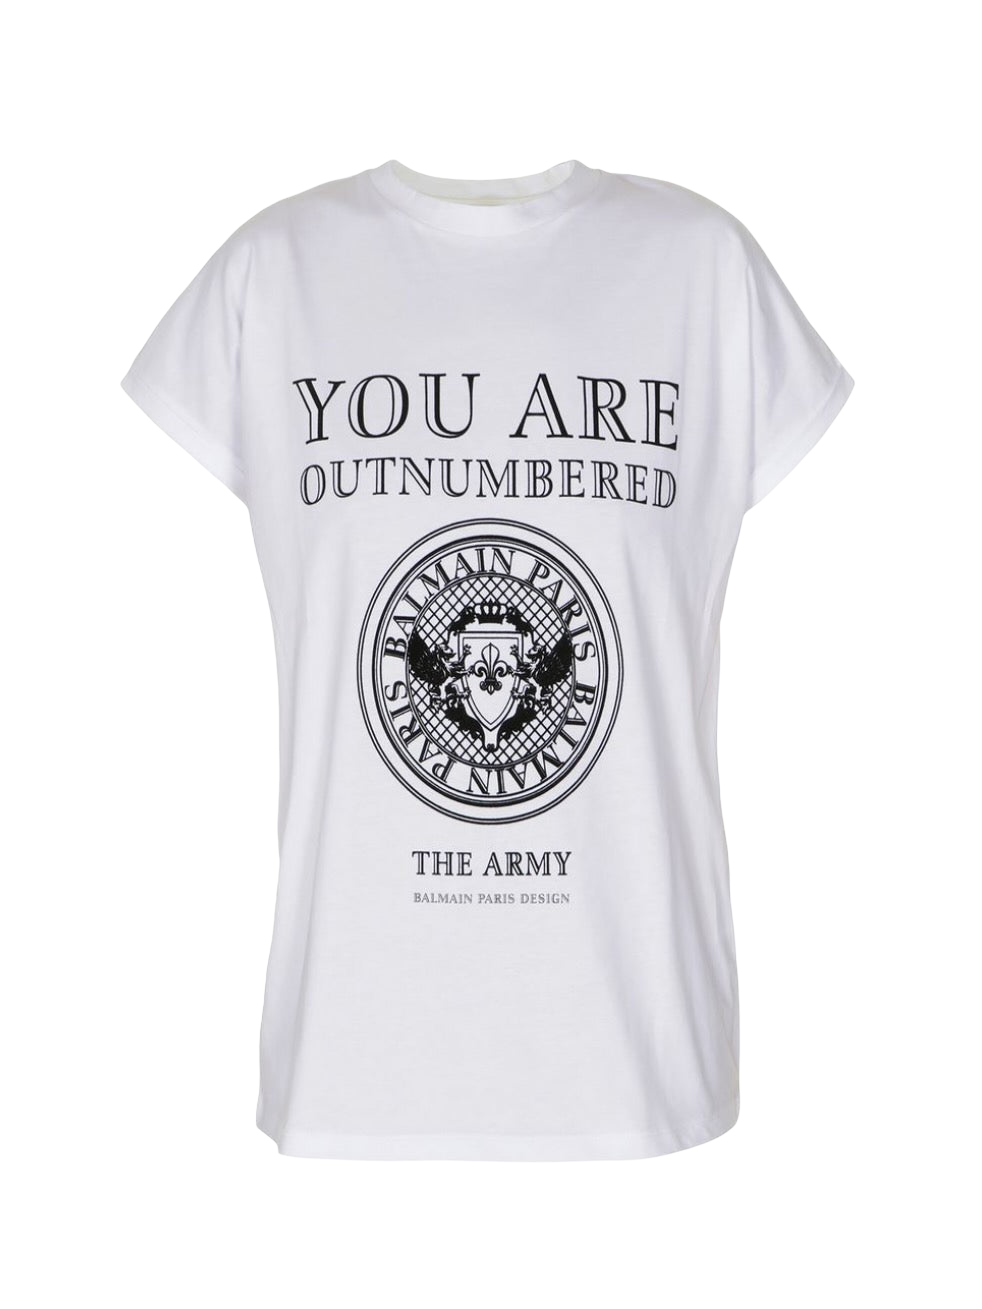 Balmain “You are Outnumbered” Graphic Tee